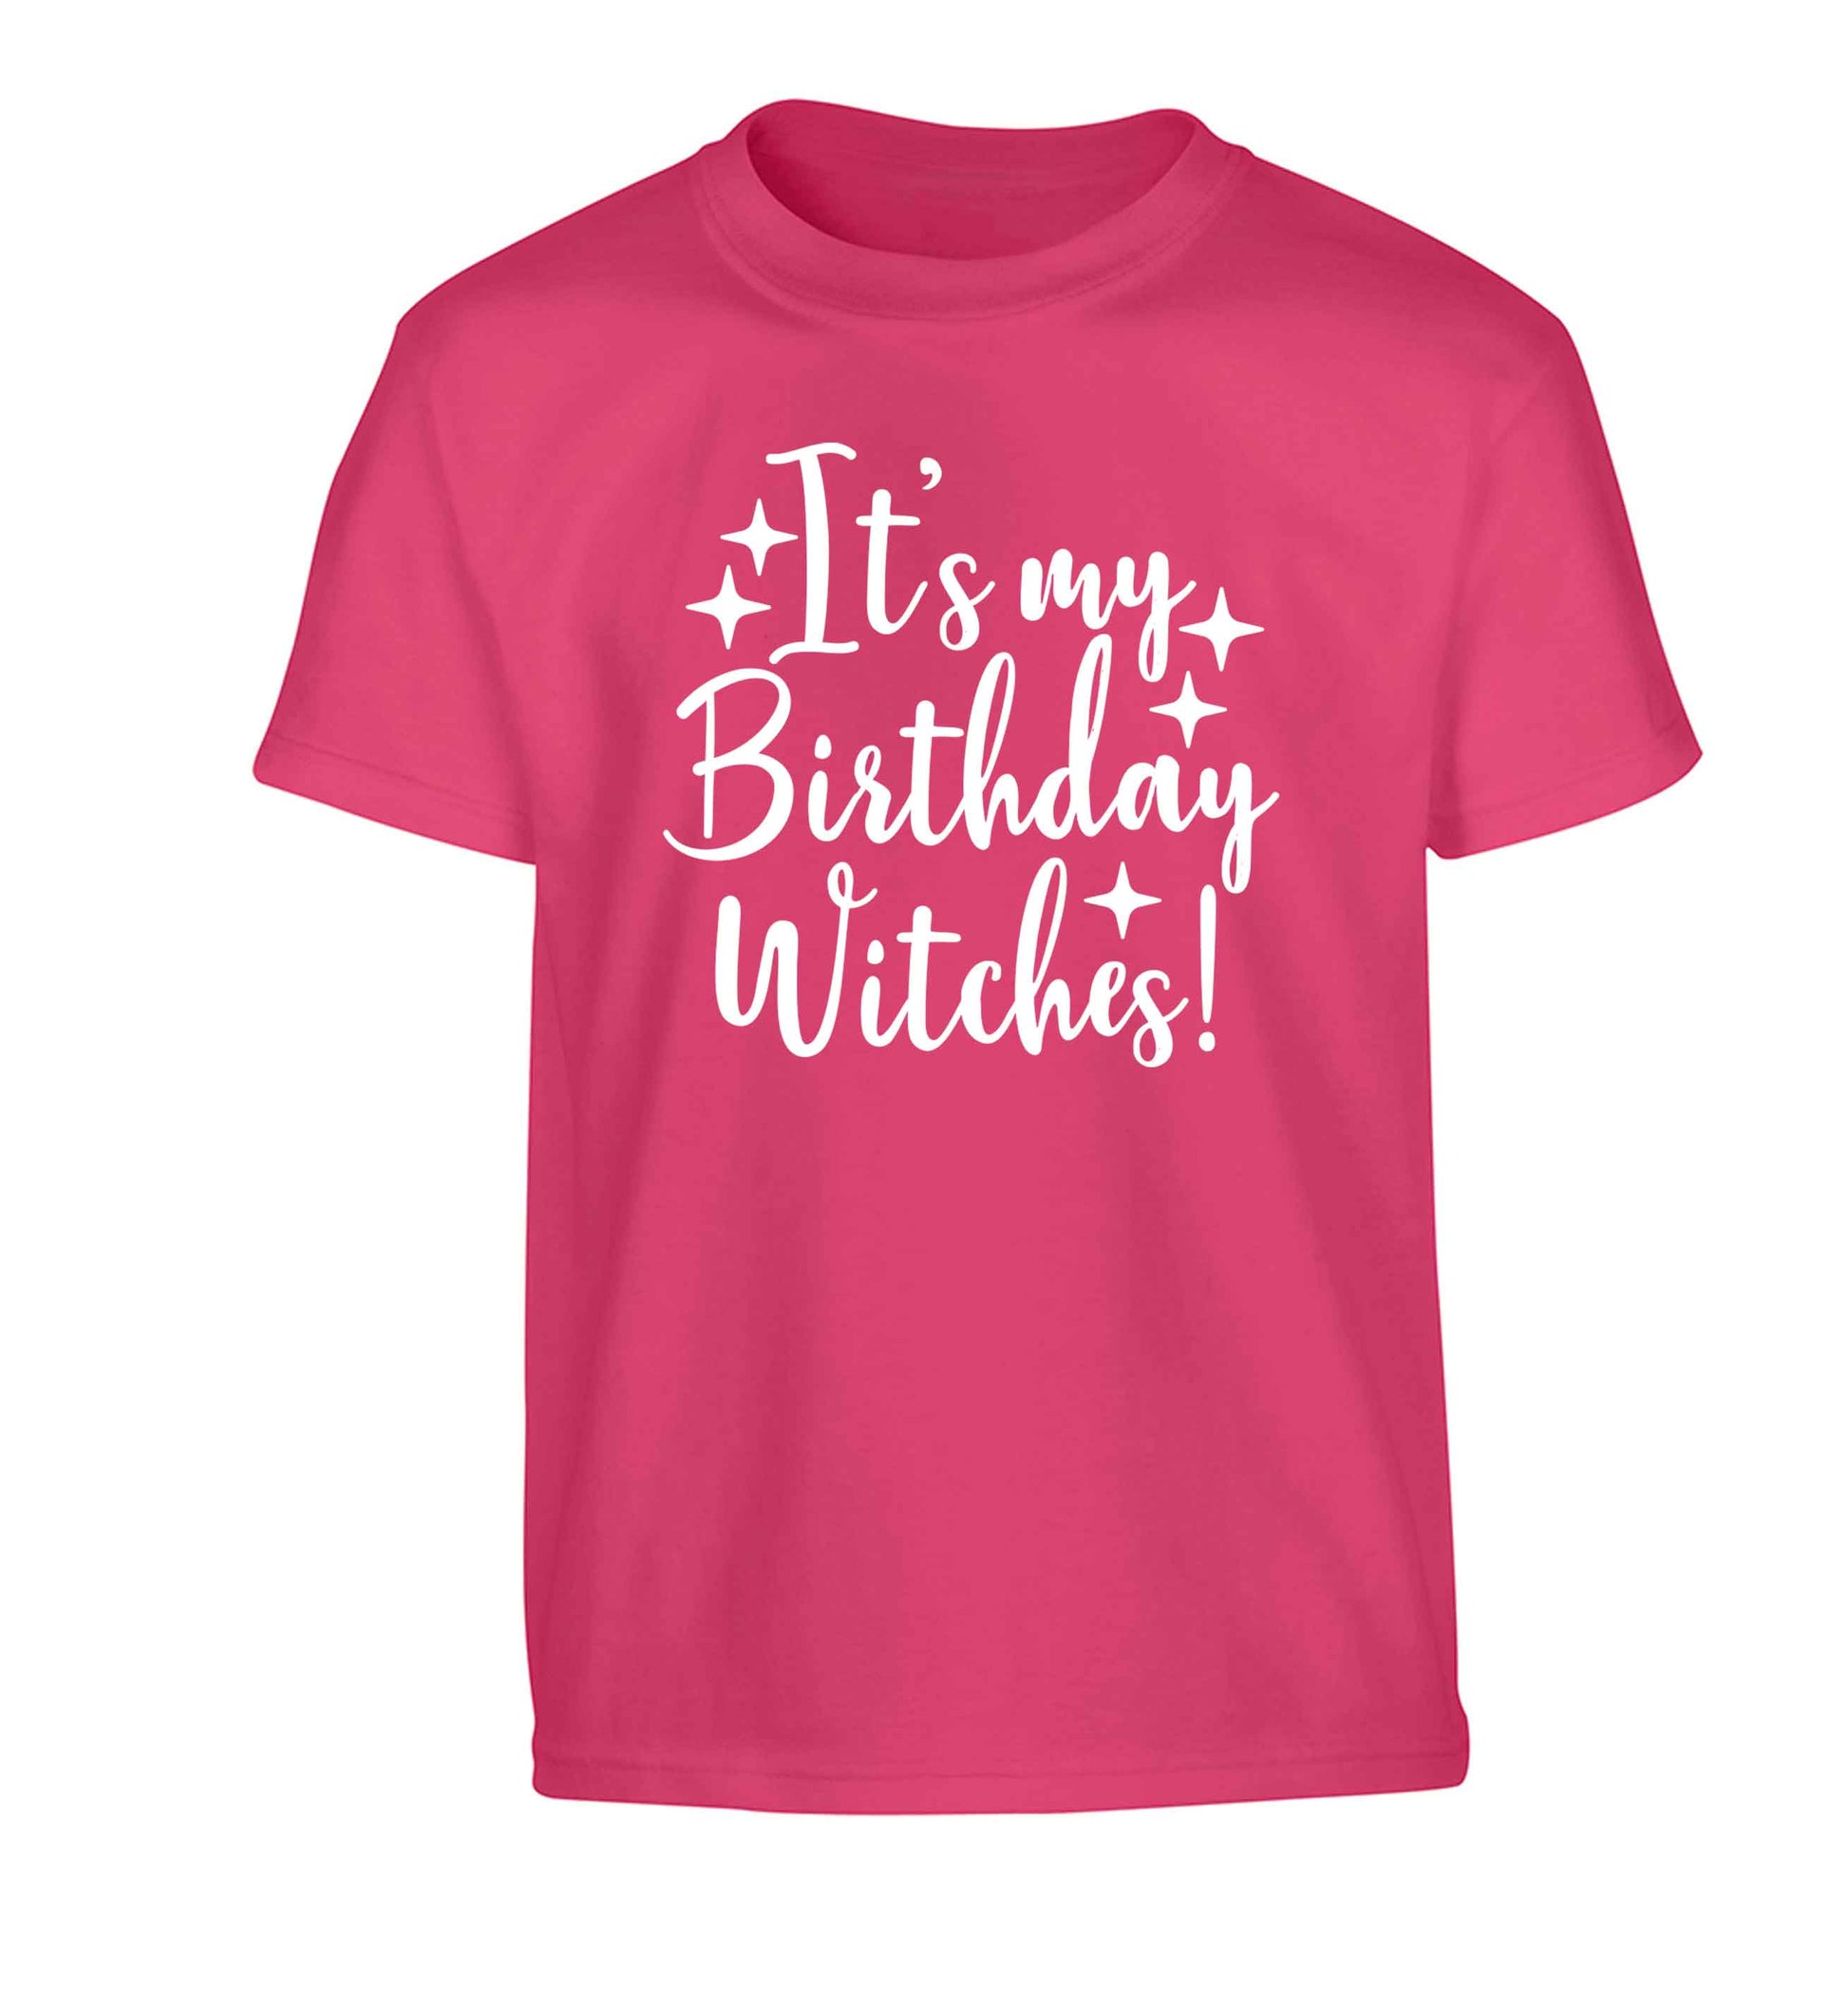 It's my birthday witches!Children's pink Tshirt 12-13 Years